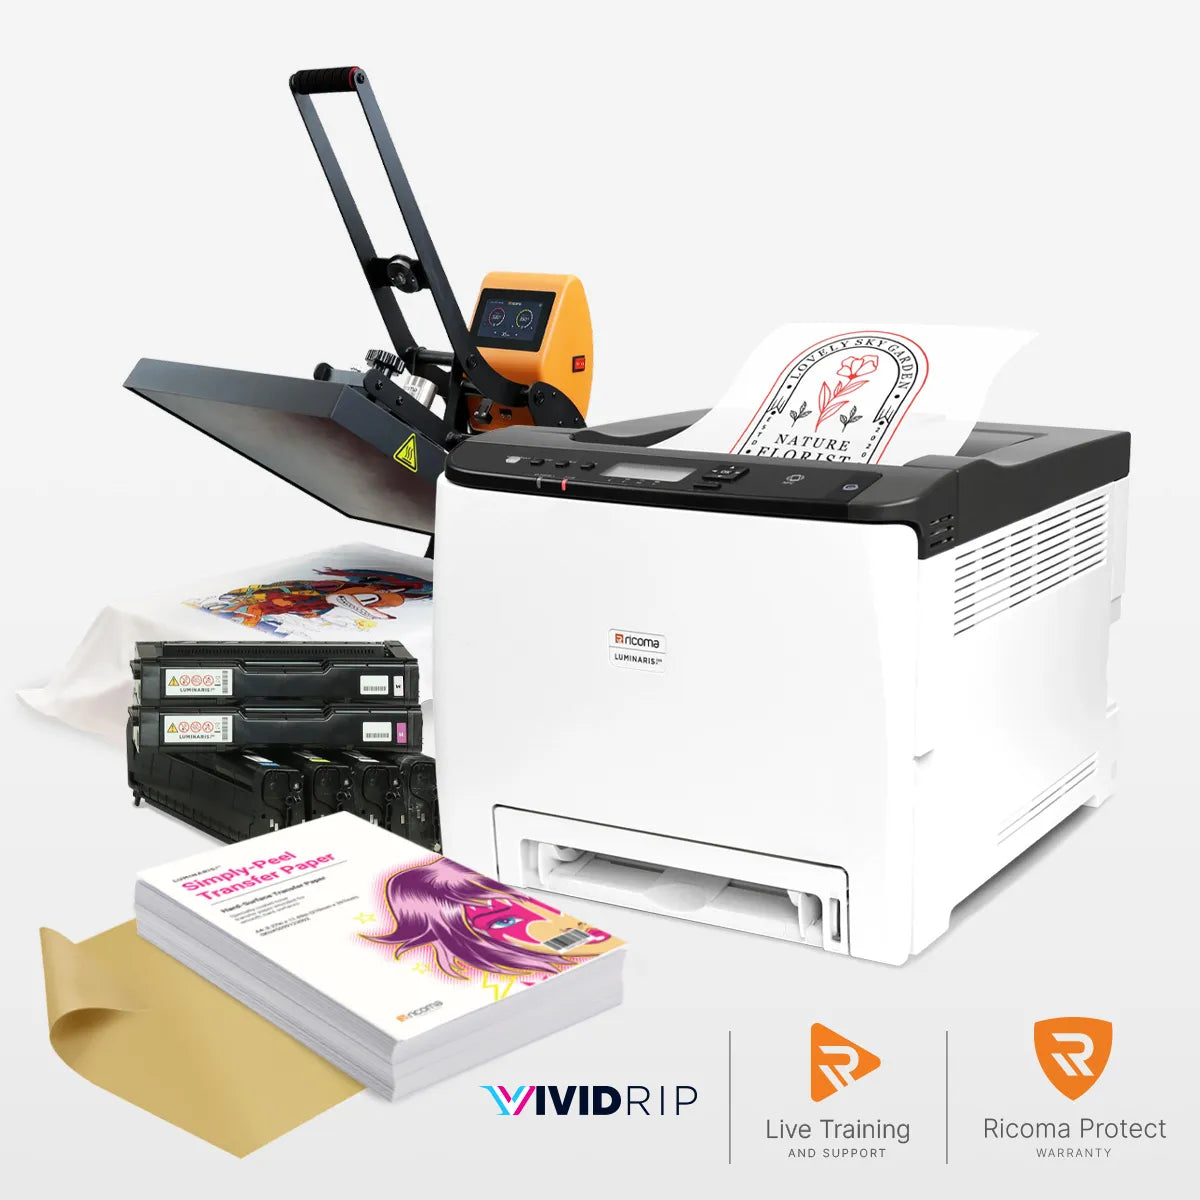 Printer Paper - Shop Printing Paper at Great Prices